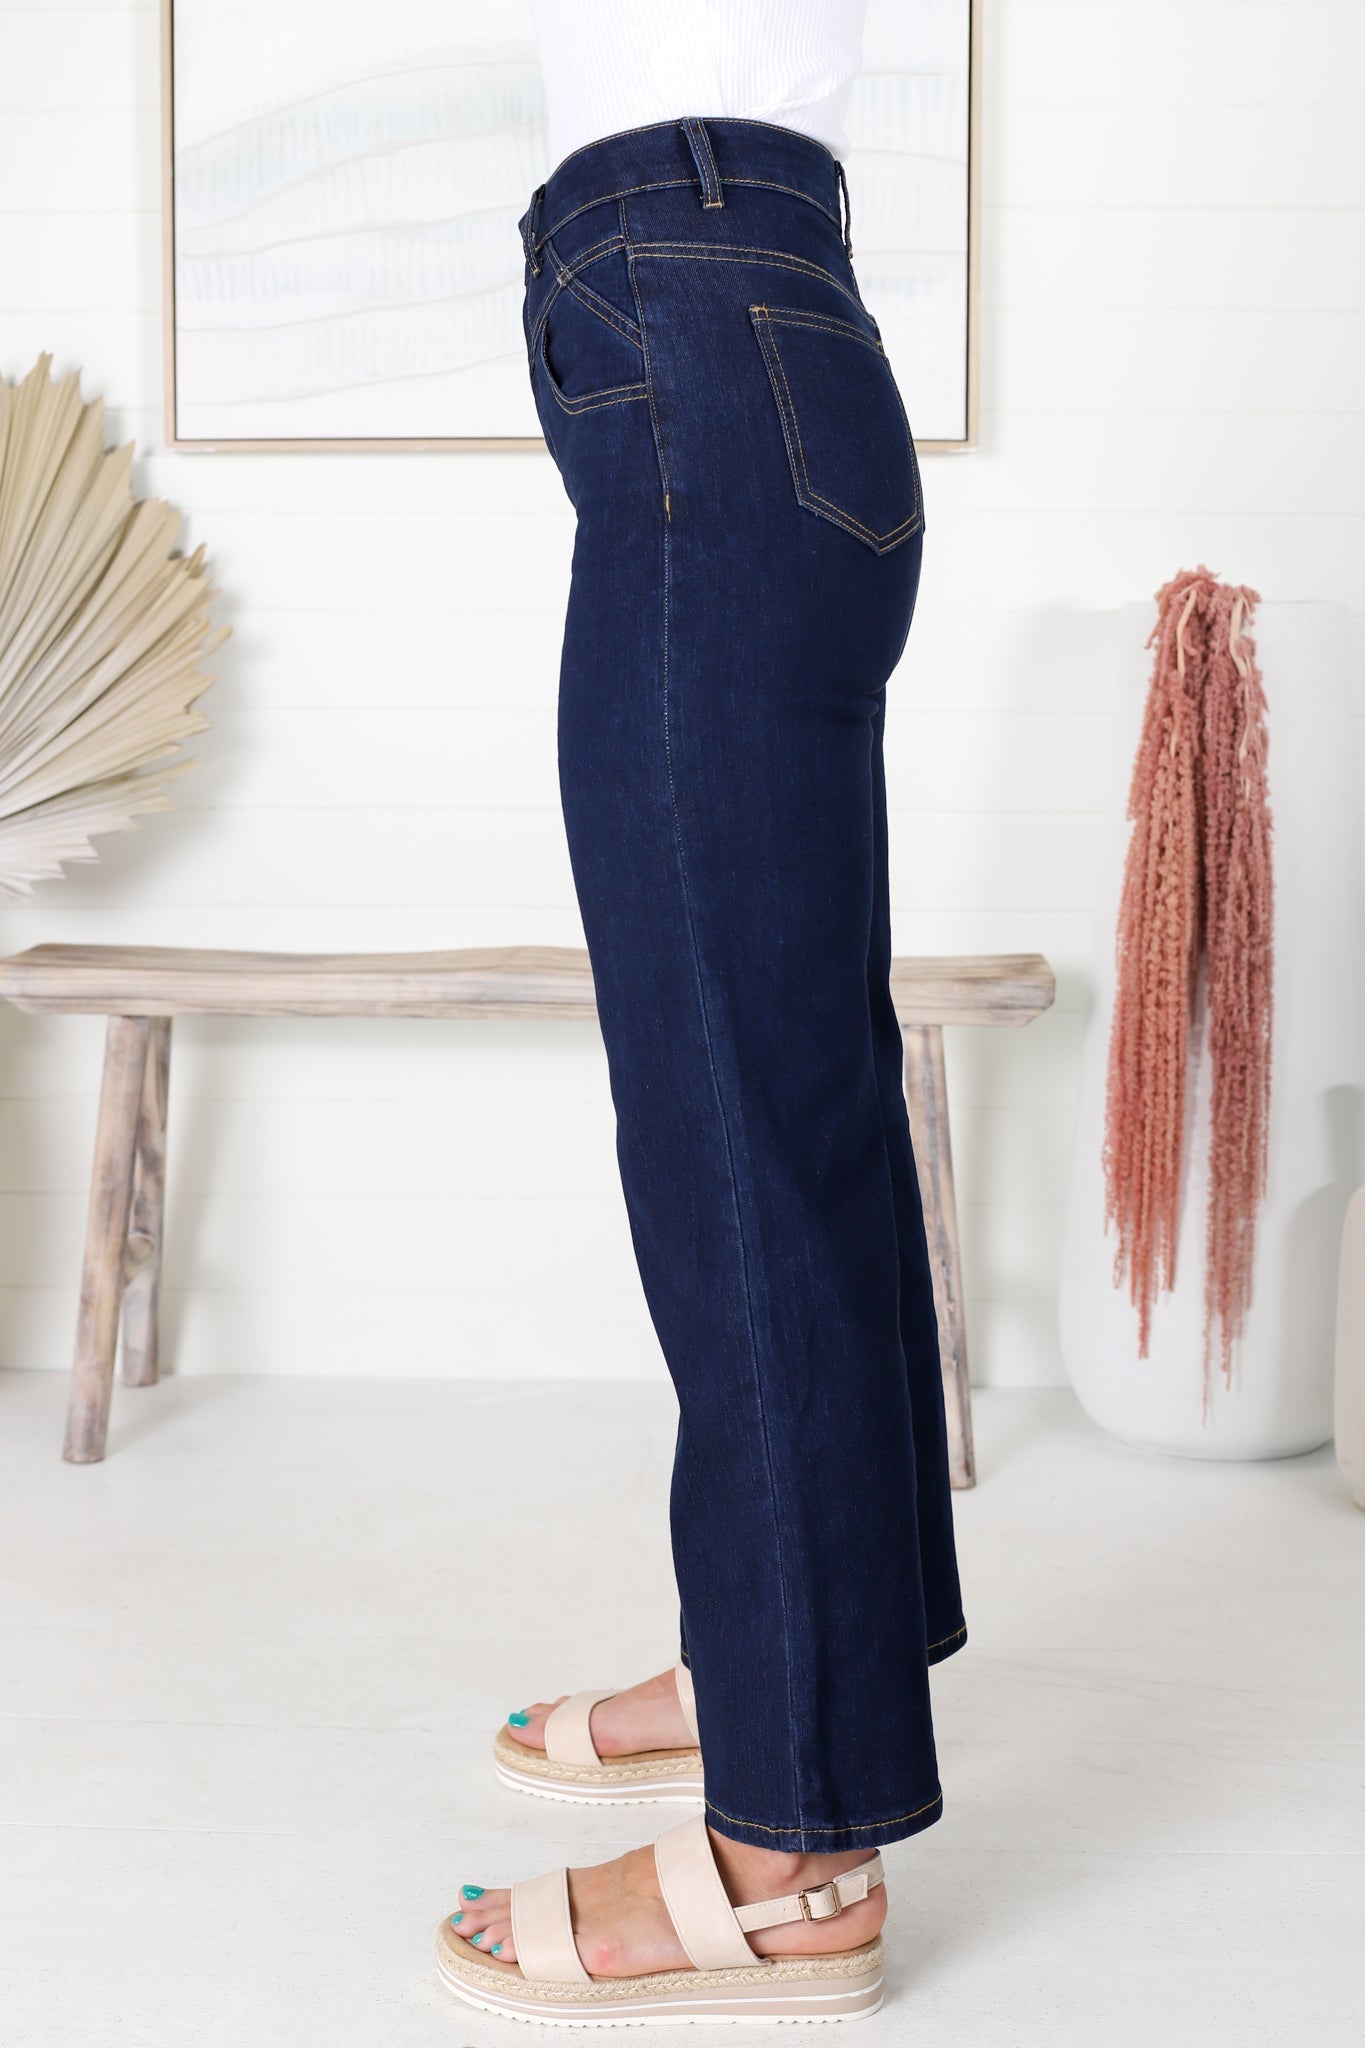 Dante Jeans - High Waisted Contrast Stitch Flare Leg Jeans in Dark Denim